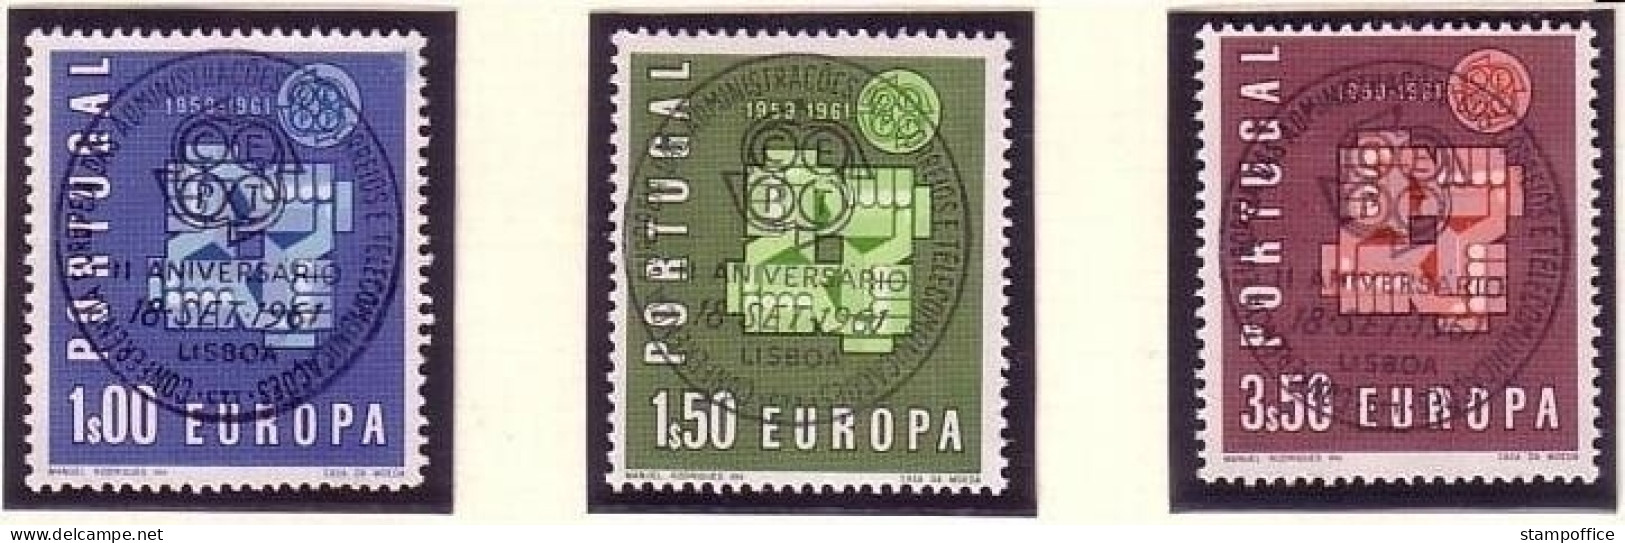 PORTUGAL MI-NR. 907-909 O EUROPA 1961 - TAUBE - 1961